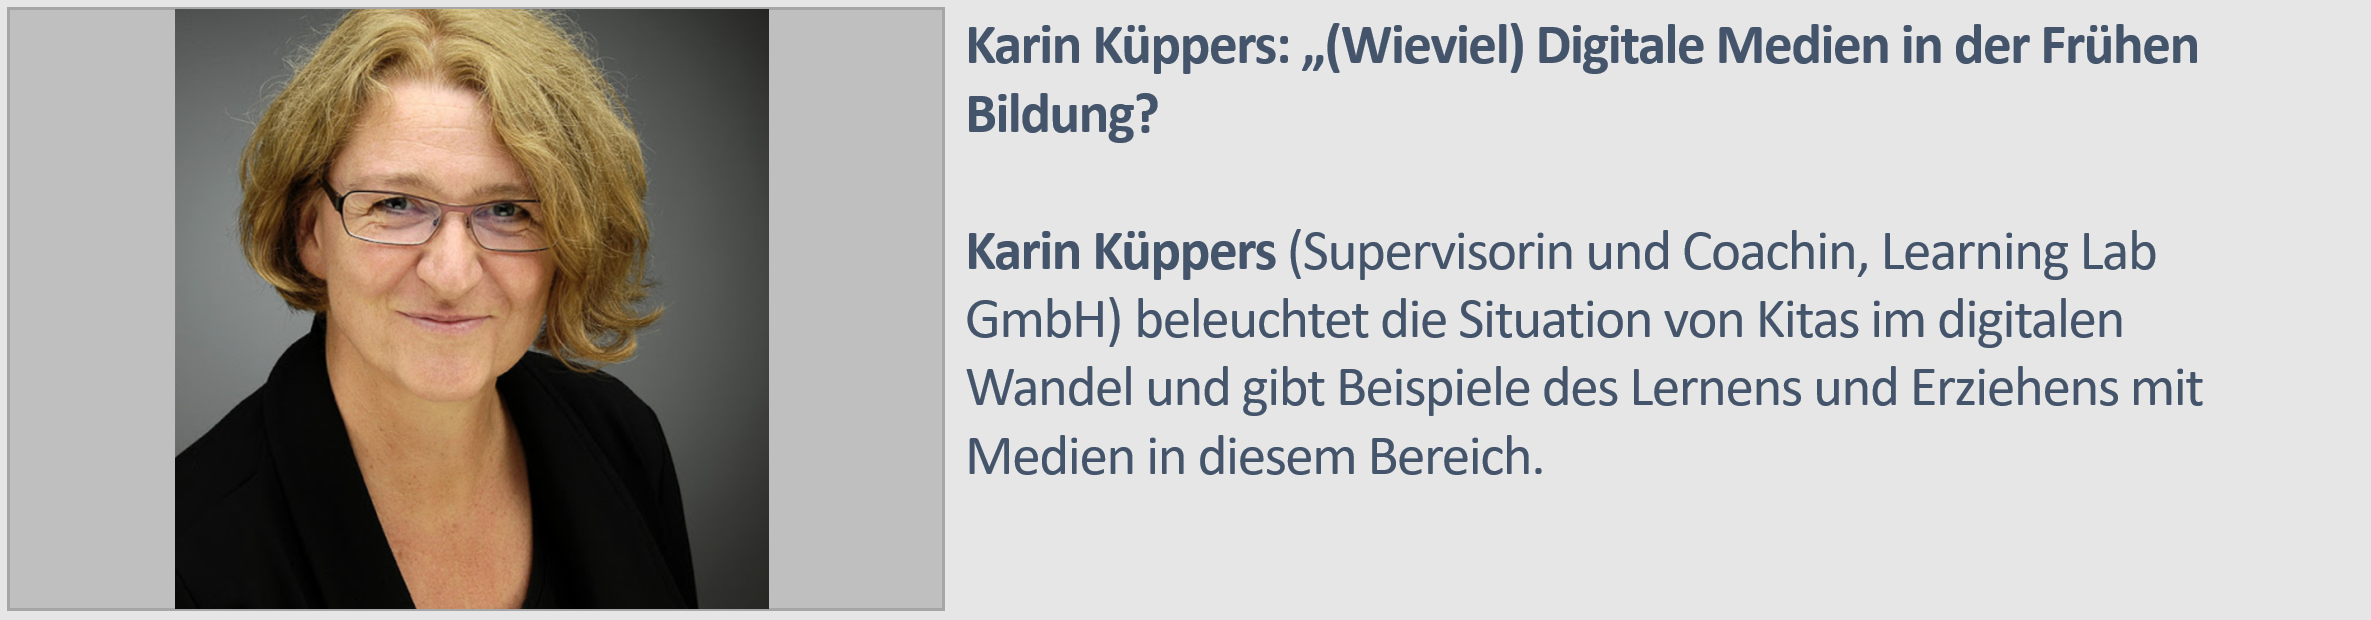 Karin Küppers